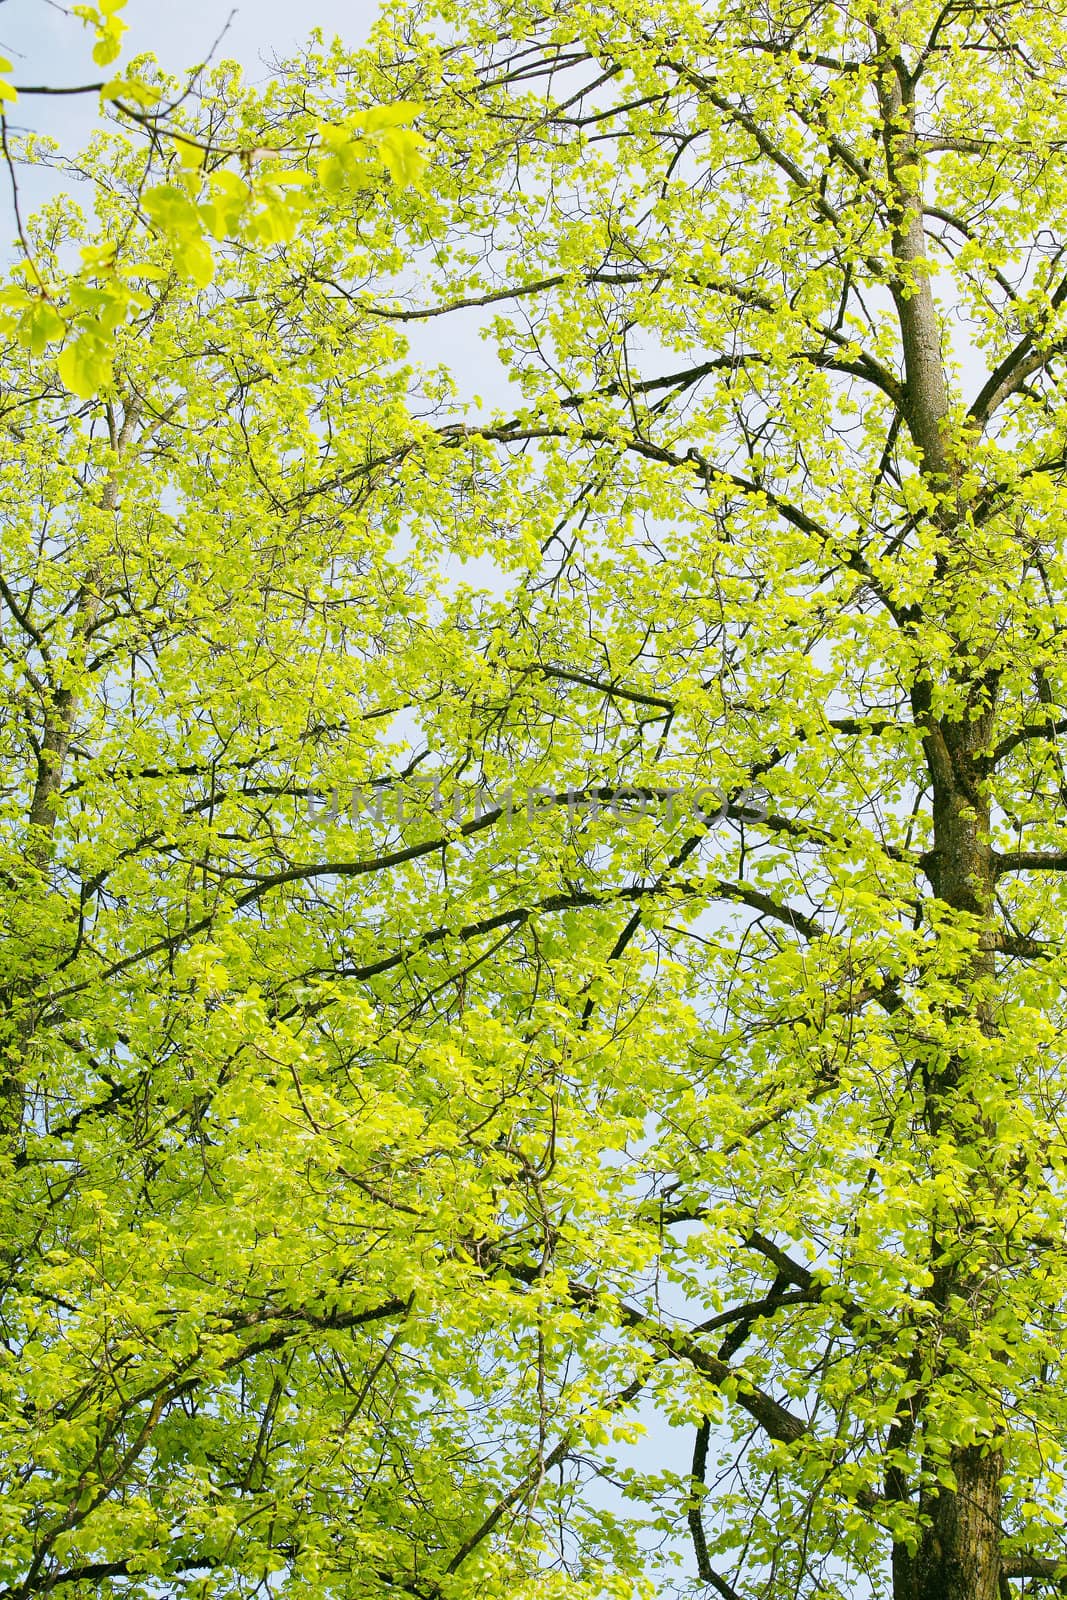 Beautiful green leaves of an American Yellow Wood make pattern background